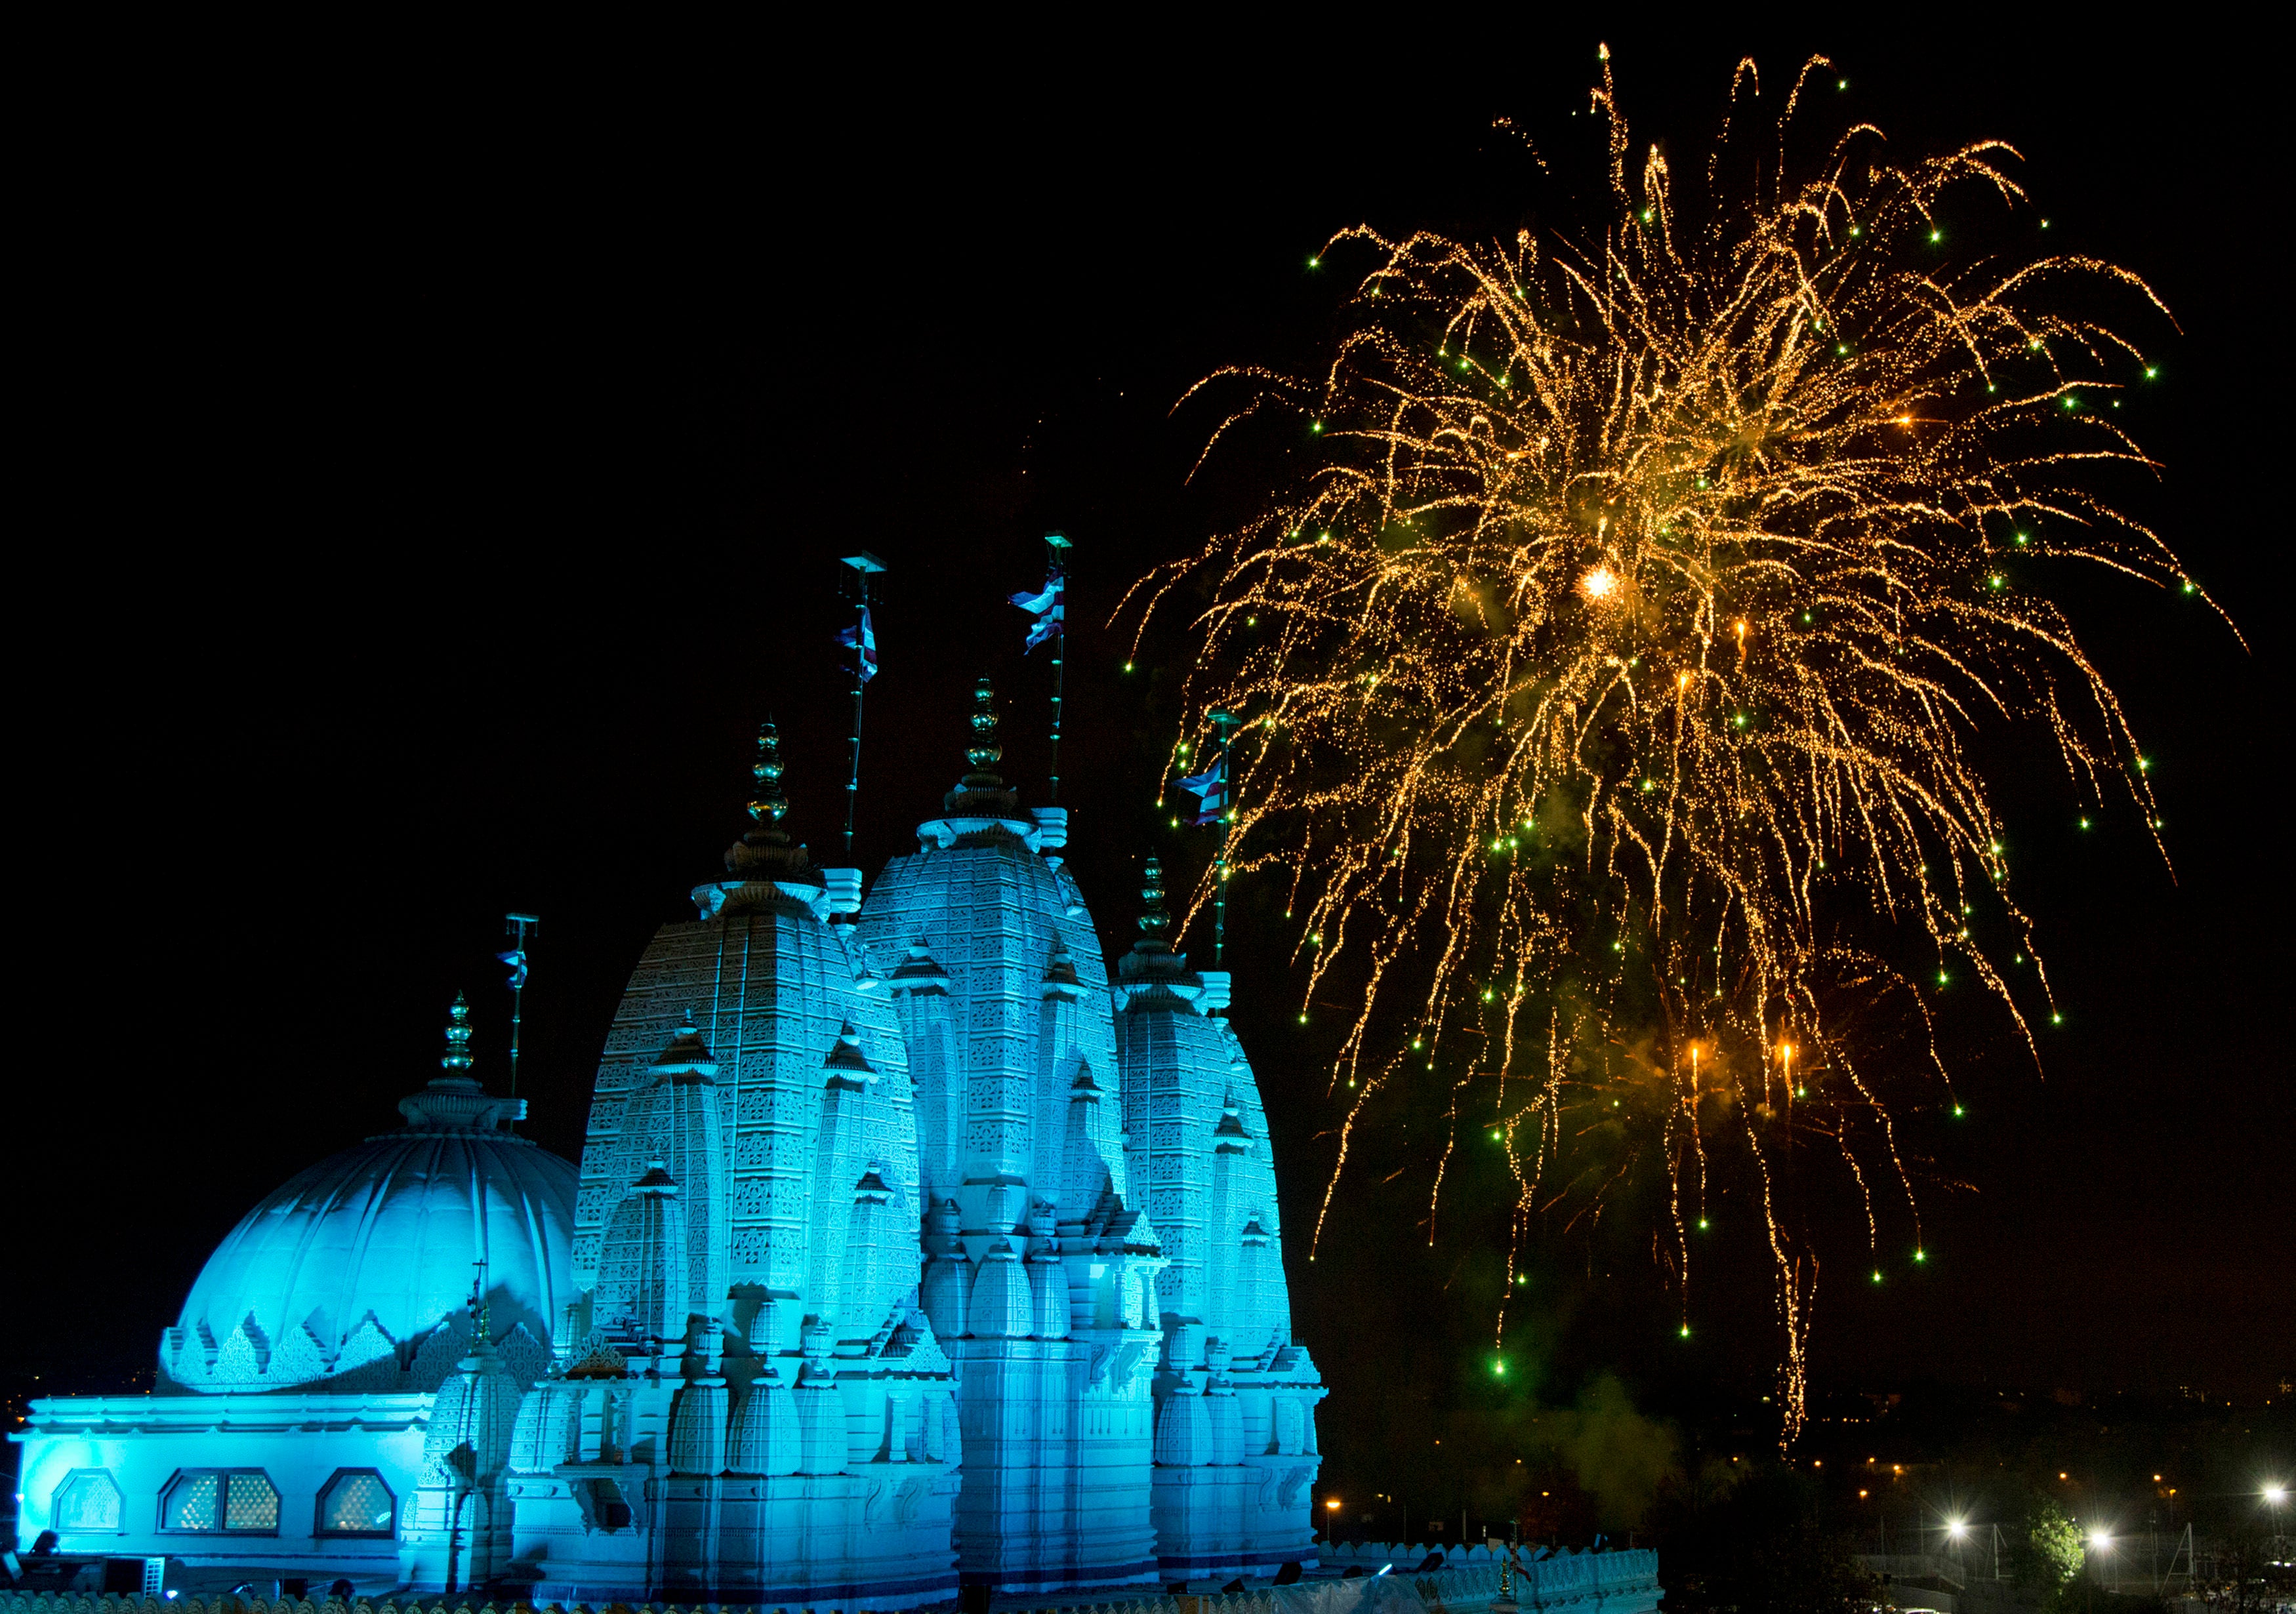 A fireworks display held near the Neasden Temple in Gibbons Park, Neasden, northwest London, to mark Diwali